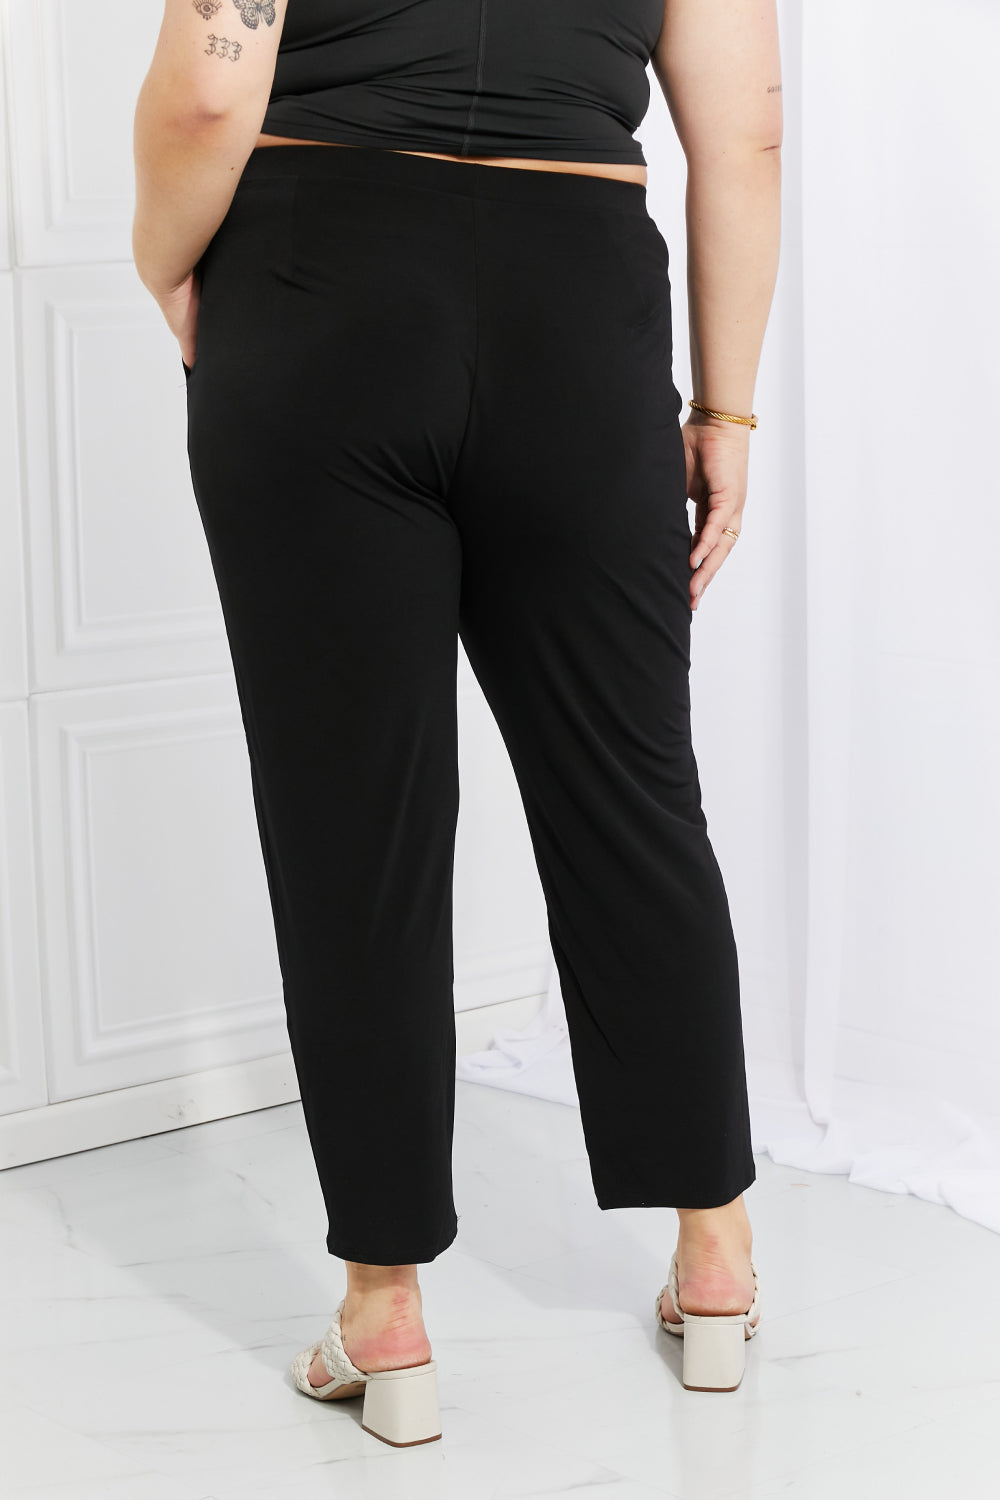 Zenana Amelia Full Size Pleated Pants Print on any thing USA/STOD clothes